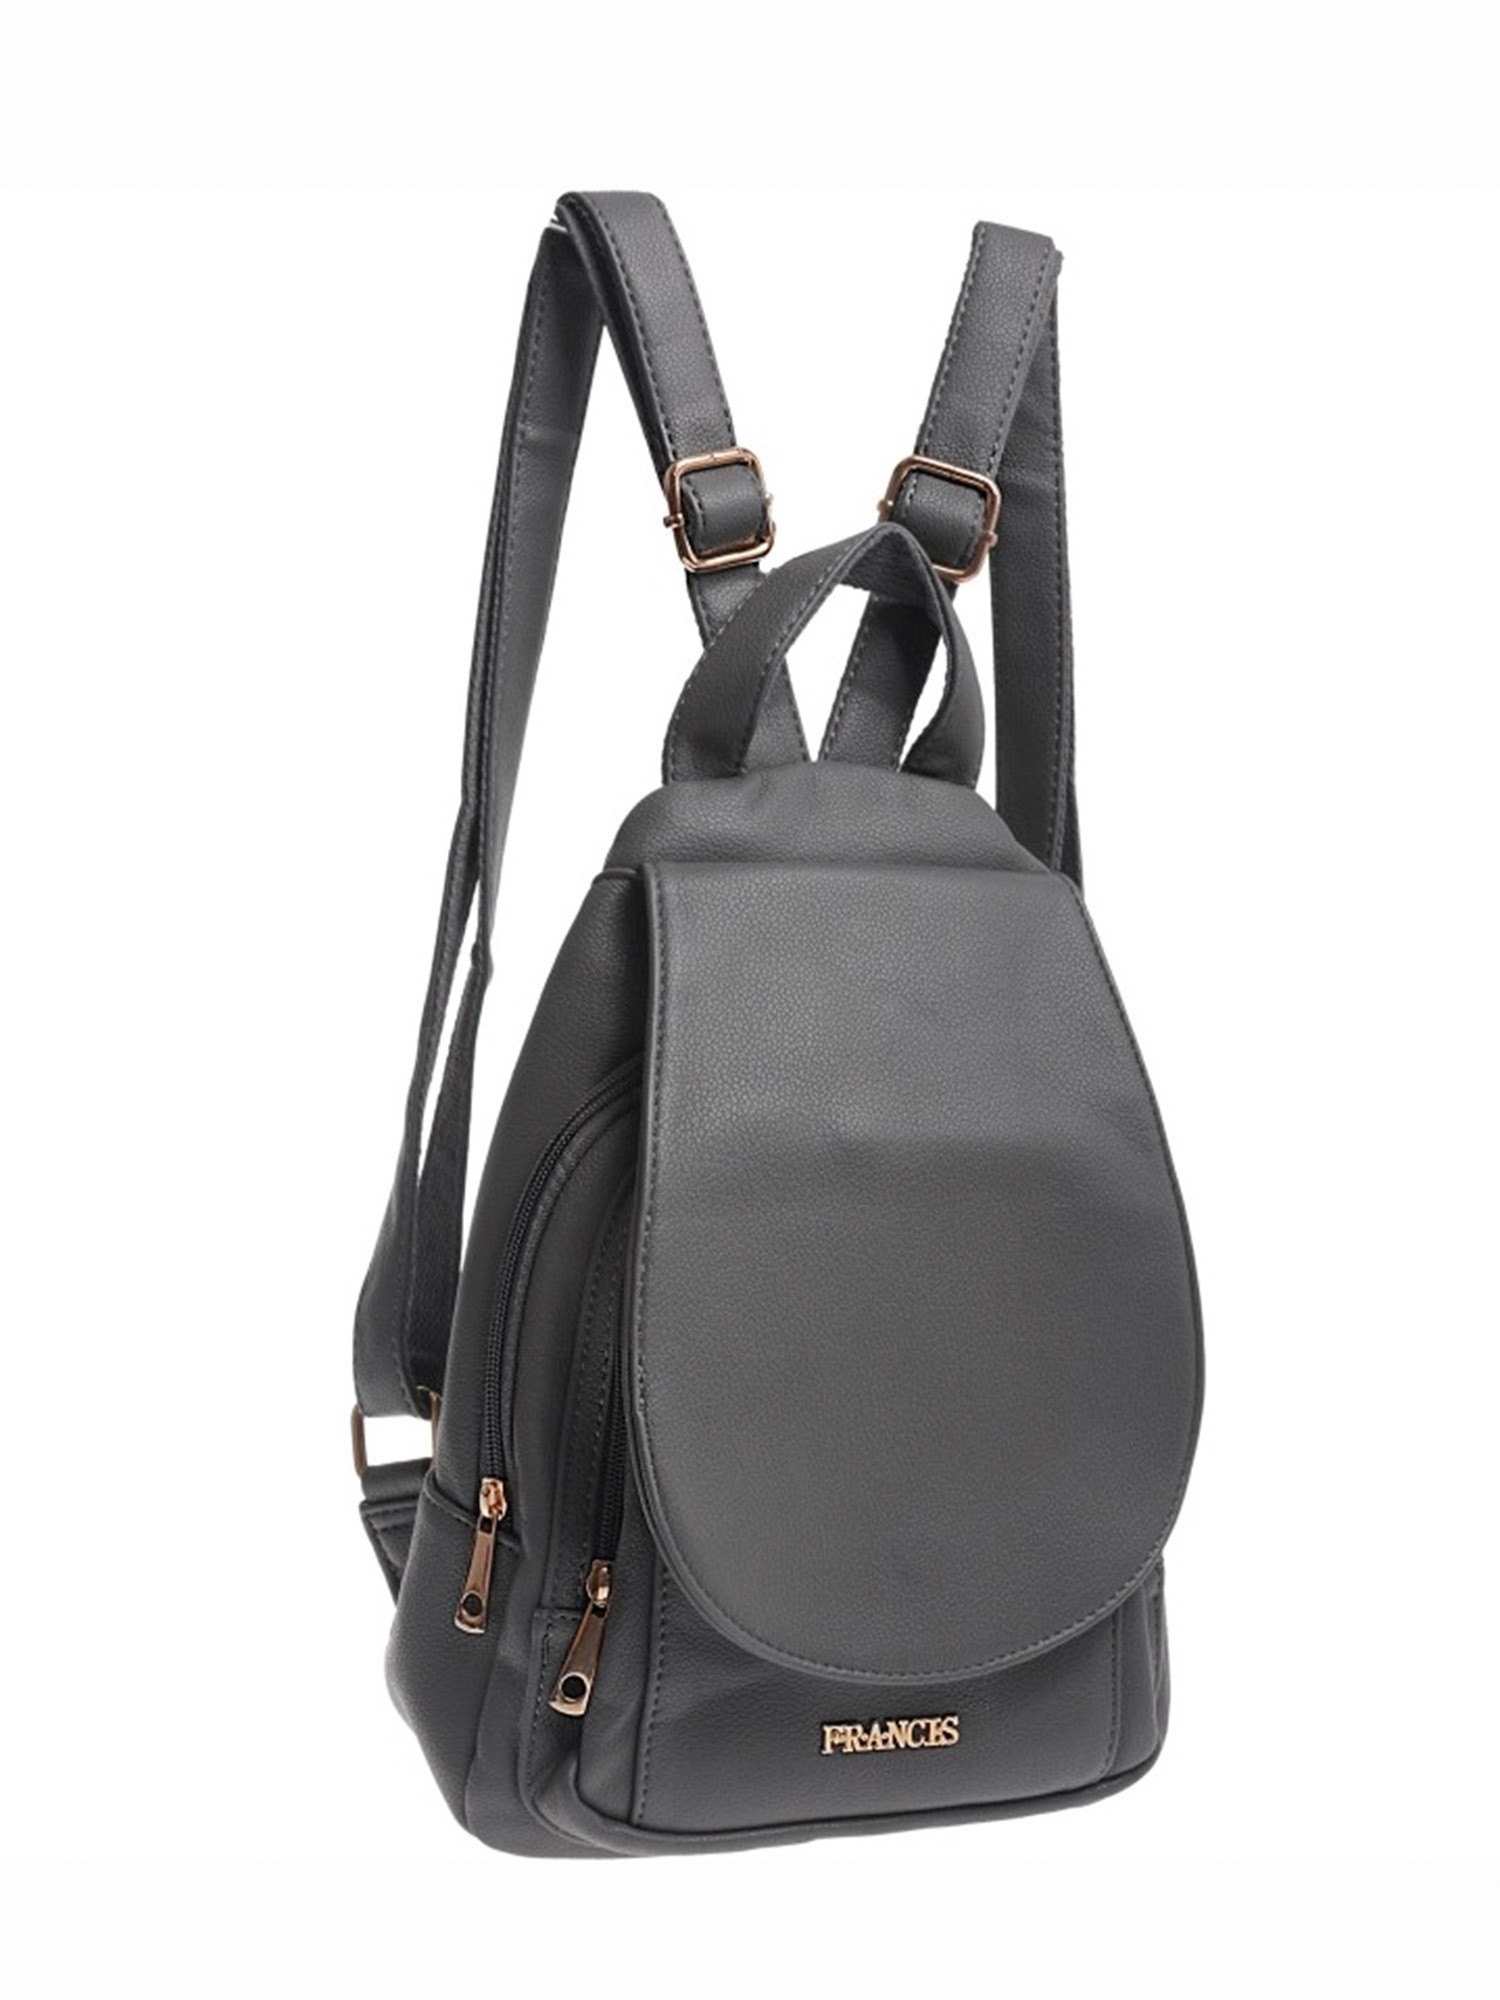 Dark grey backpack with adjustable straps